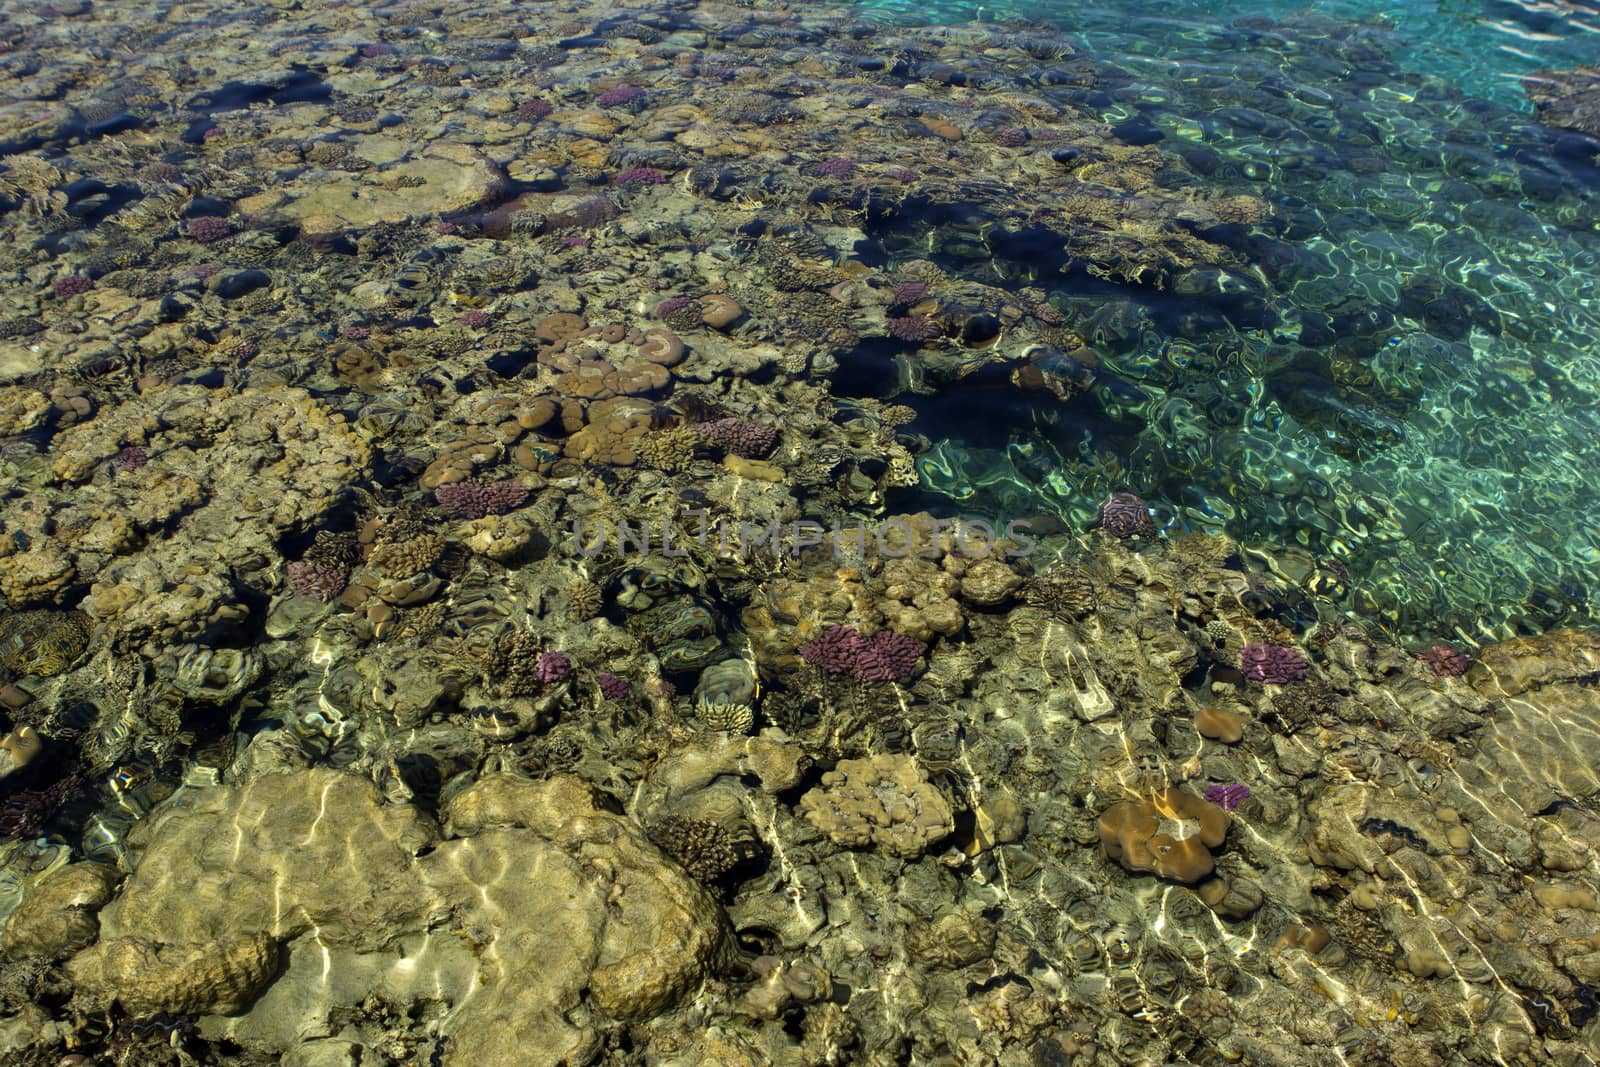 coral reef by Tomjac1980